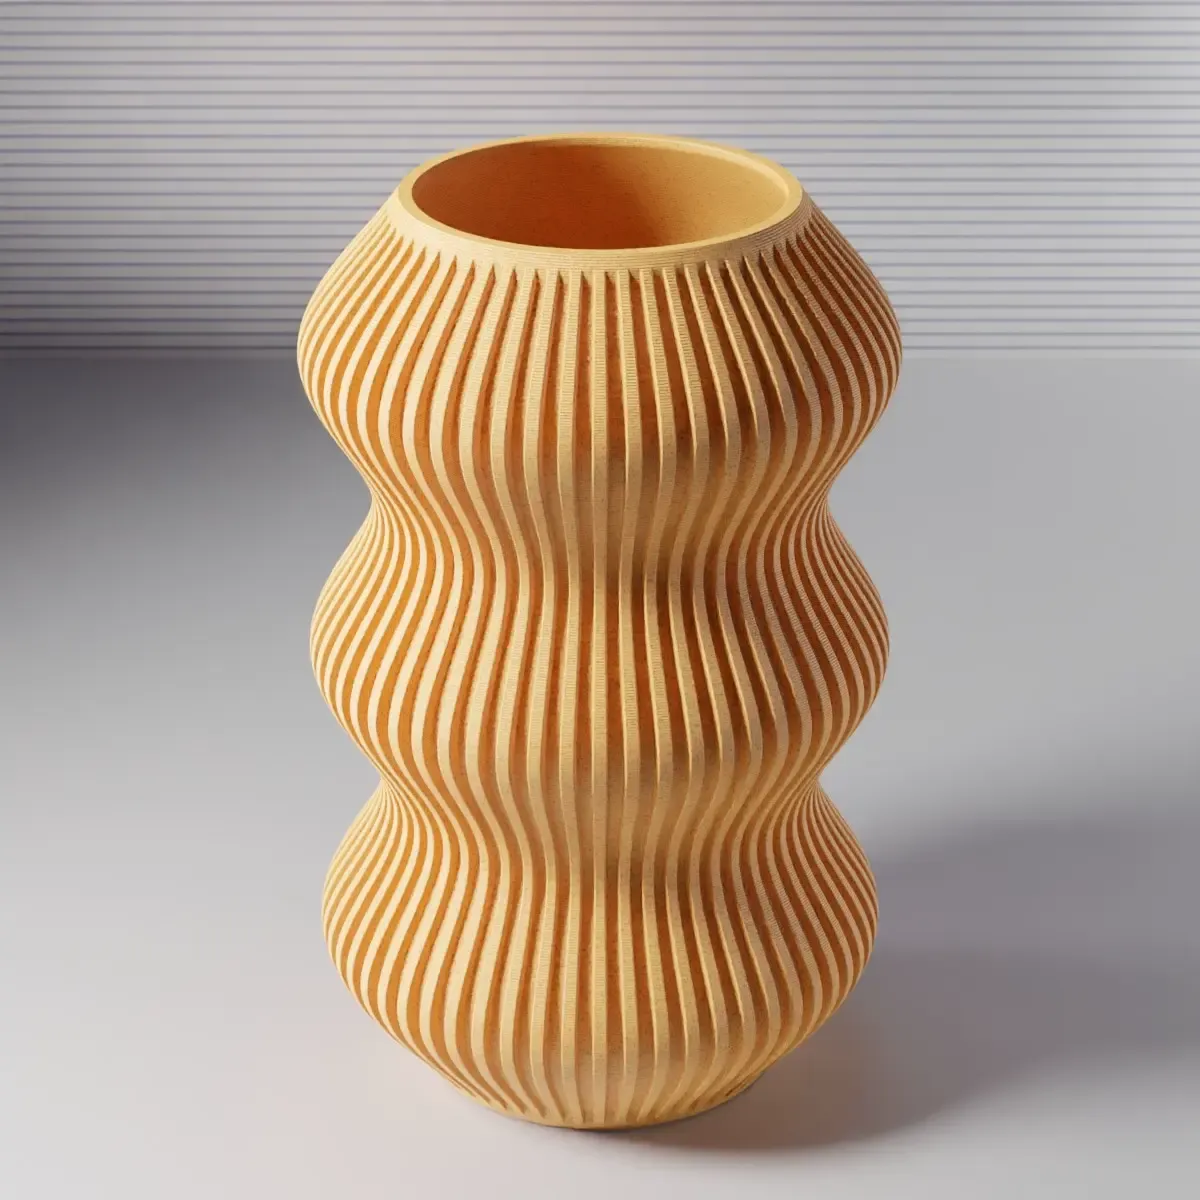 Vase 0080 A - Wavy vase